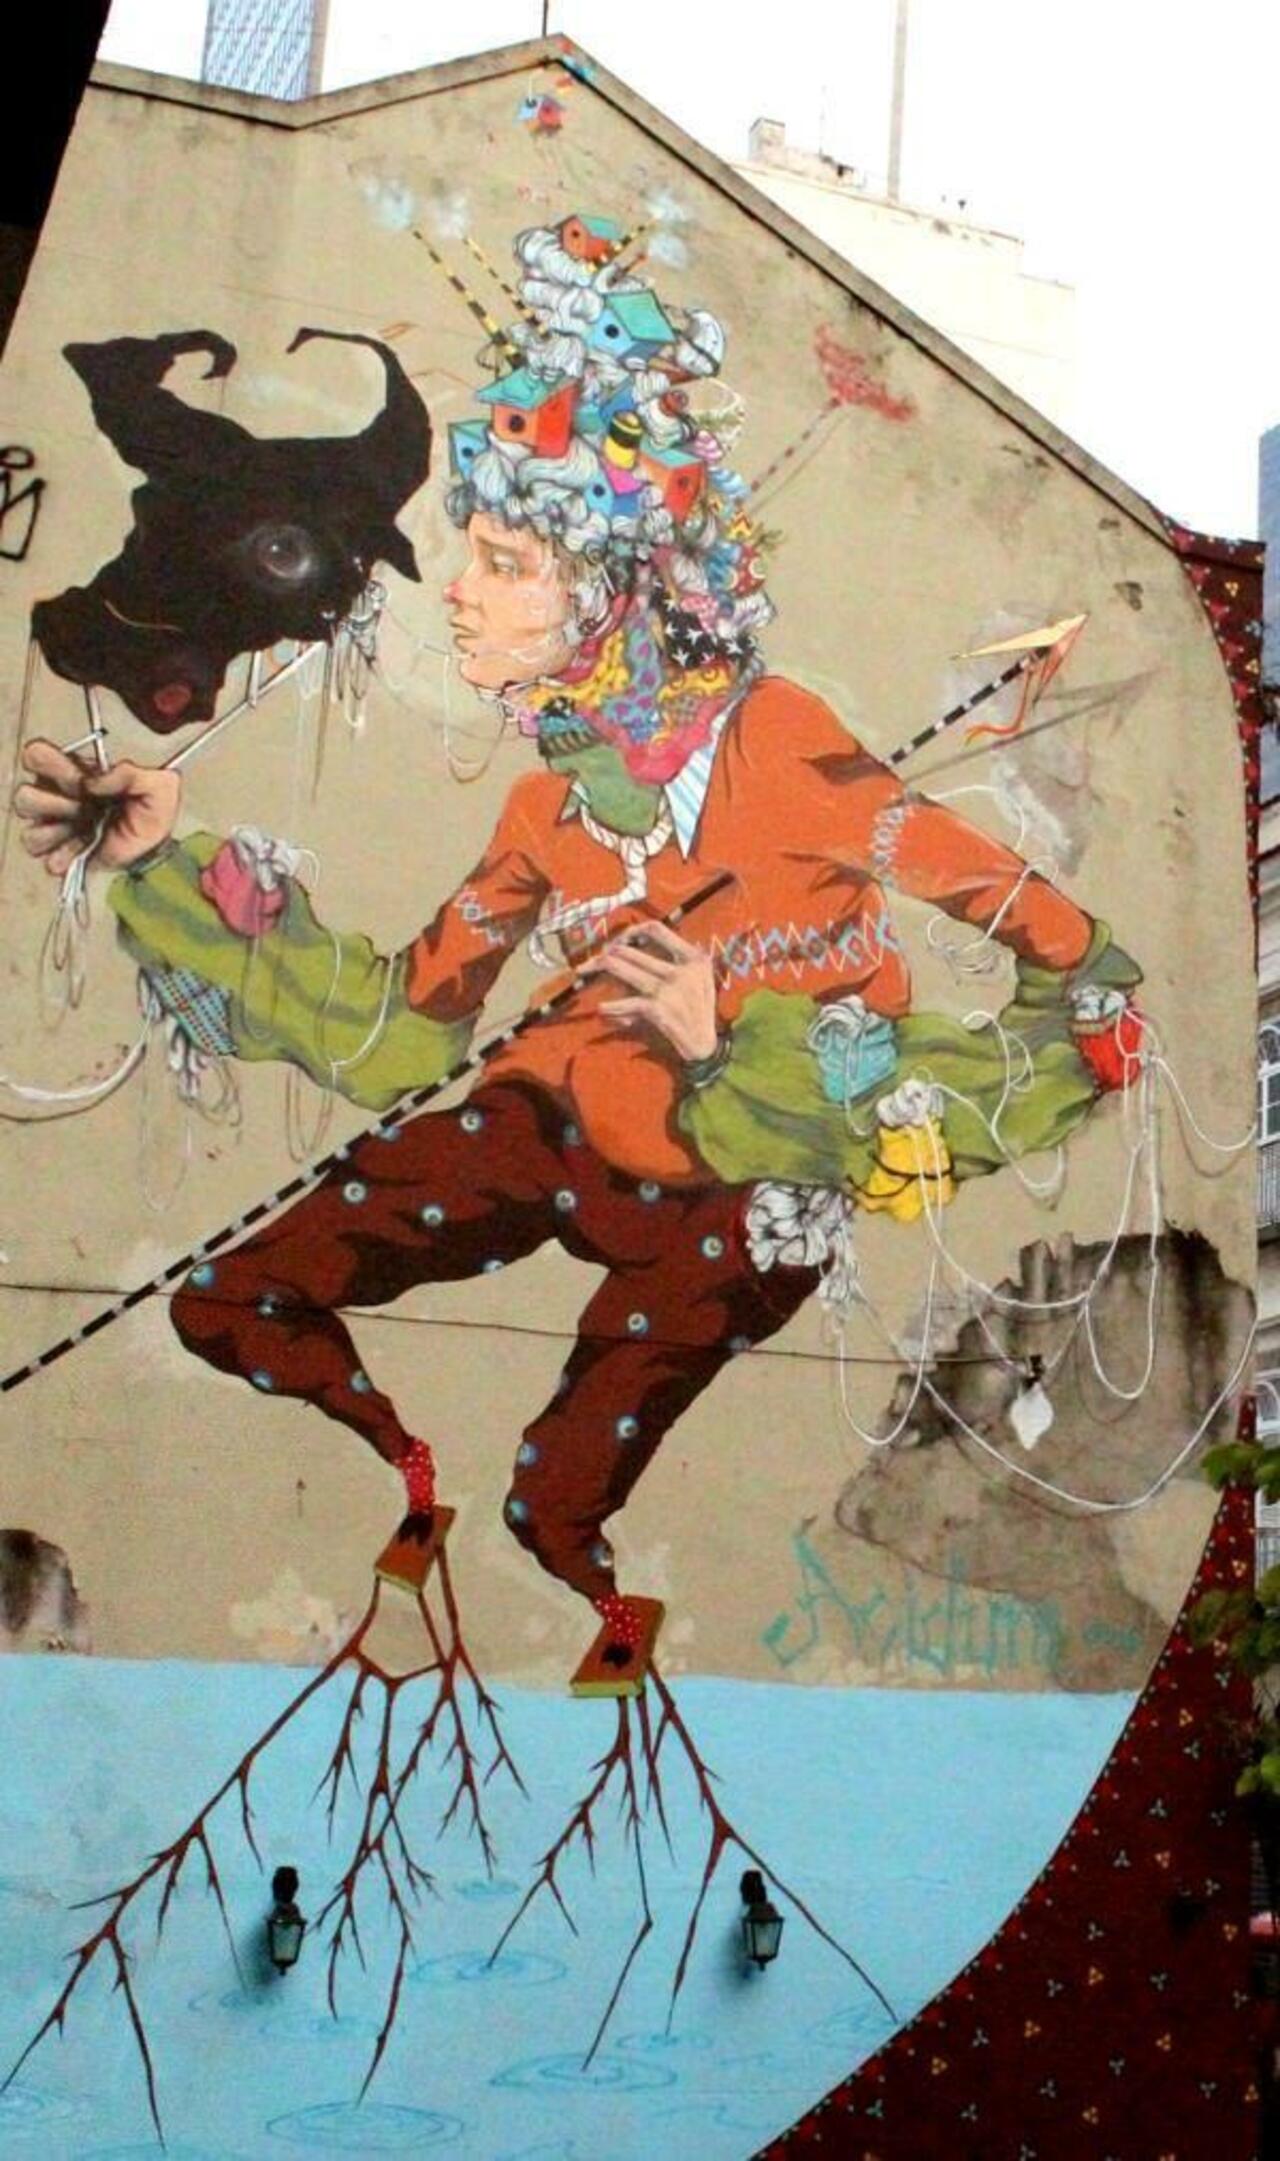 Nice “@Pitchuskita: Latin American street artists - Grupo Acidum
#streetart #art #graffiti #mural http://t.co/aXxvNNHt8N”